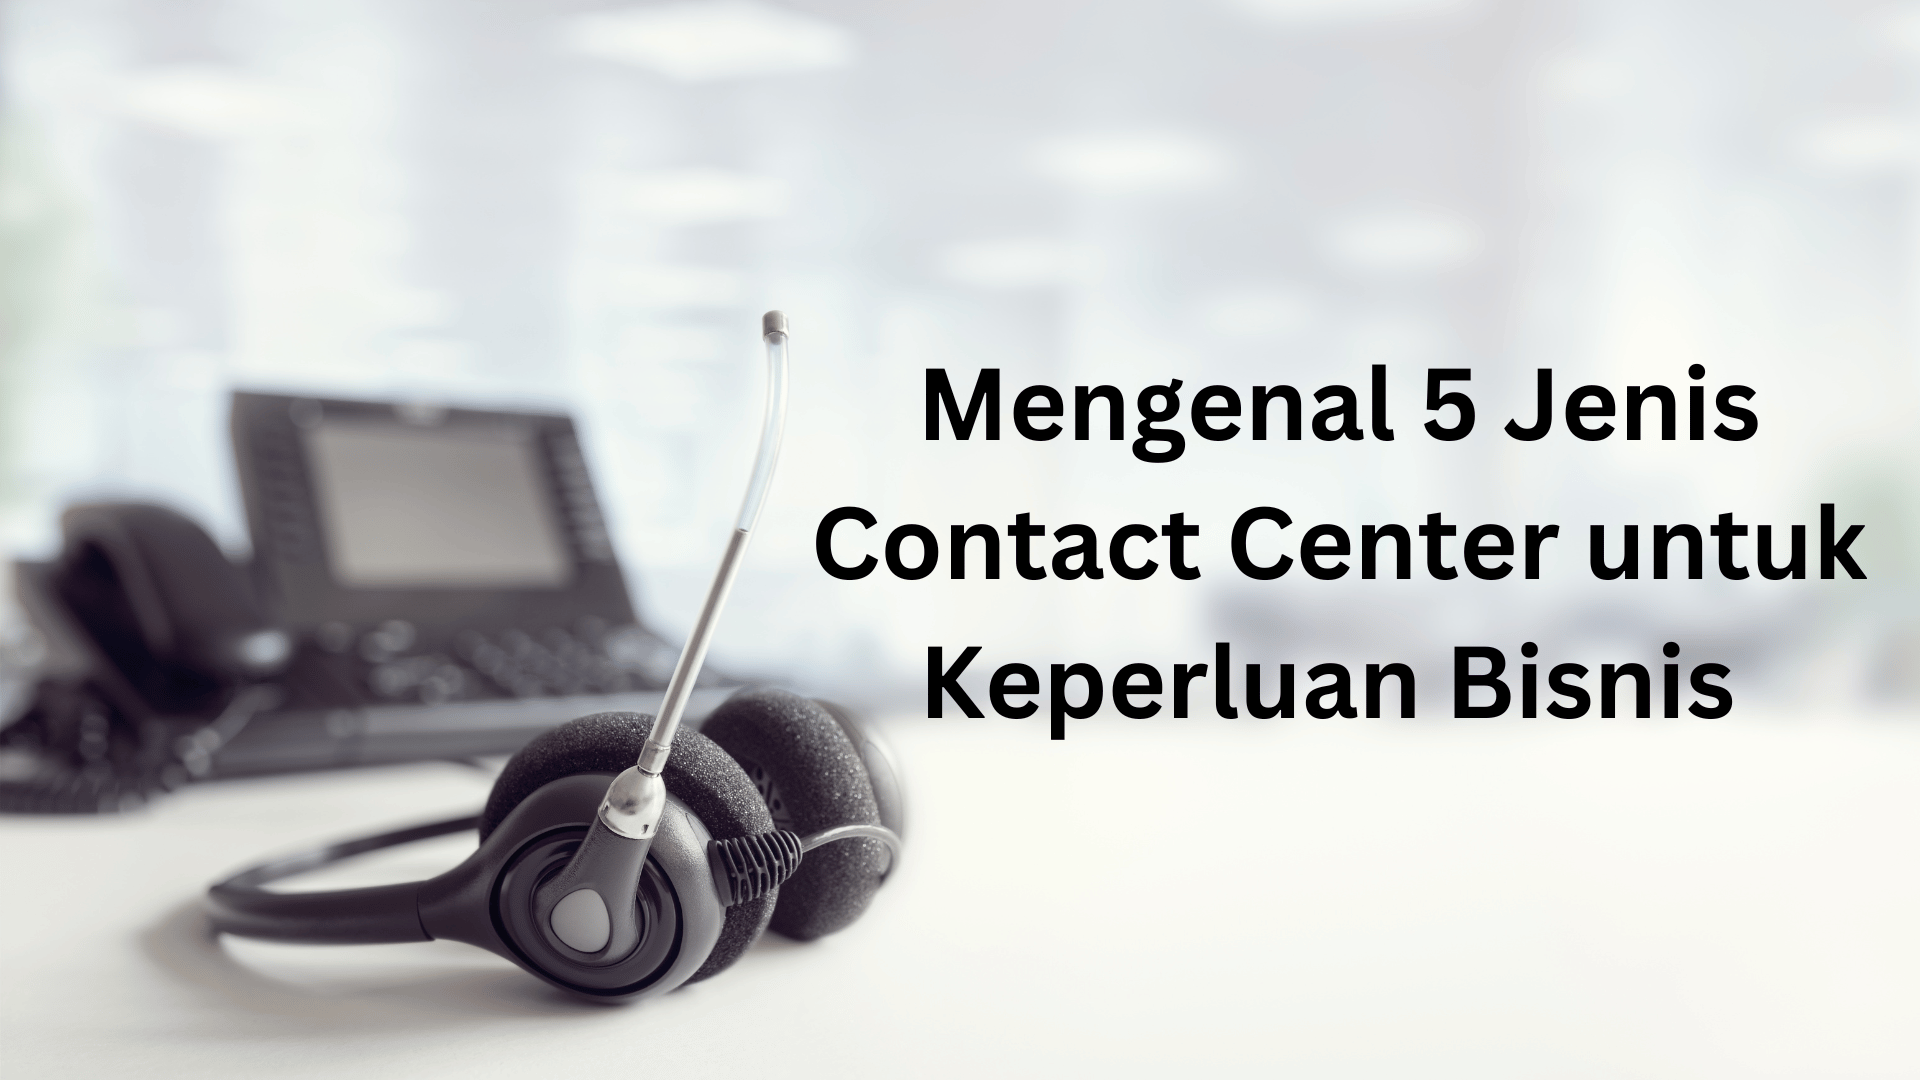 Image of Mengenal 5 Jenis Contact Center untuk Keperluan Bisnis 